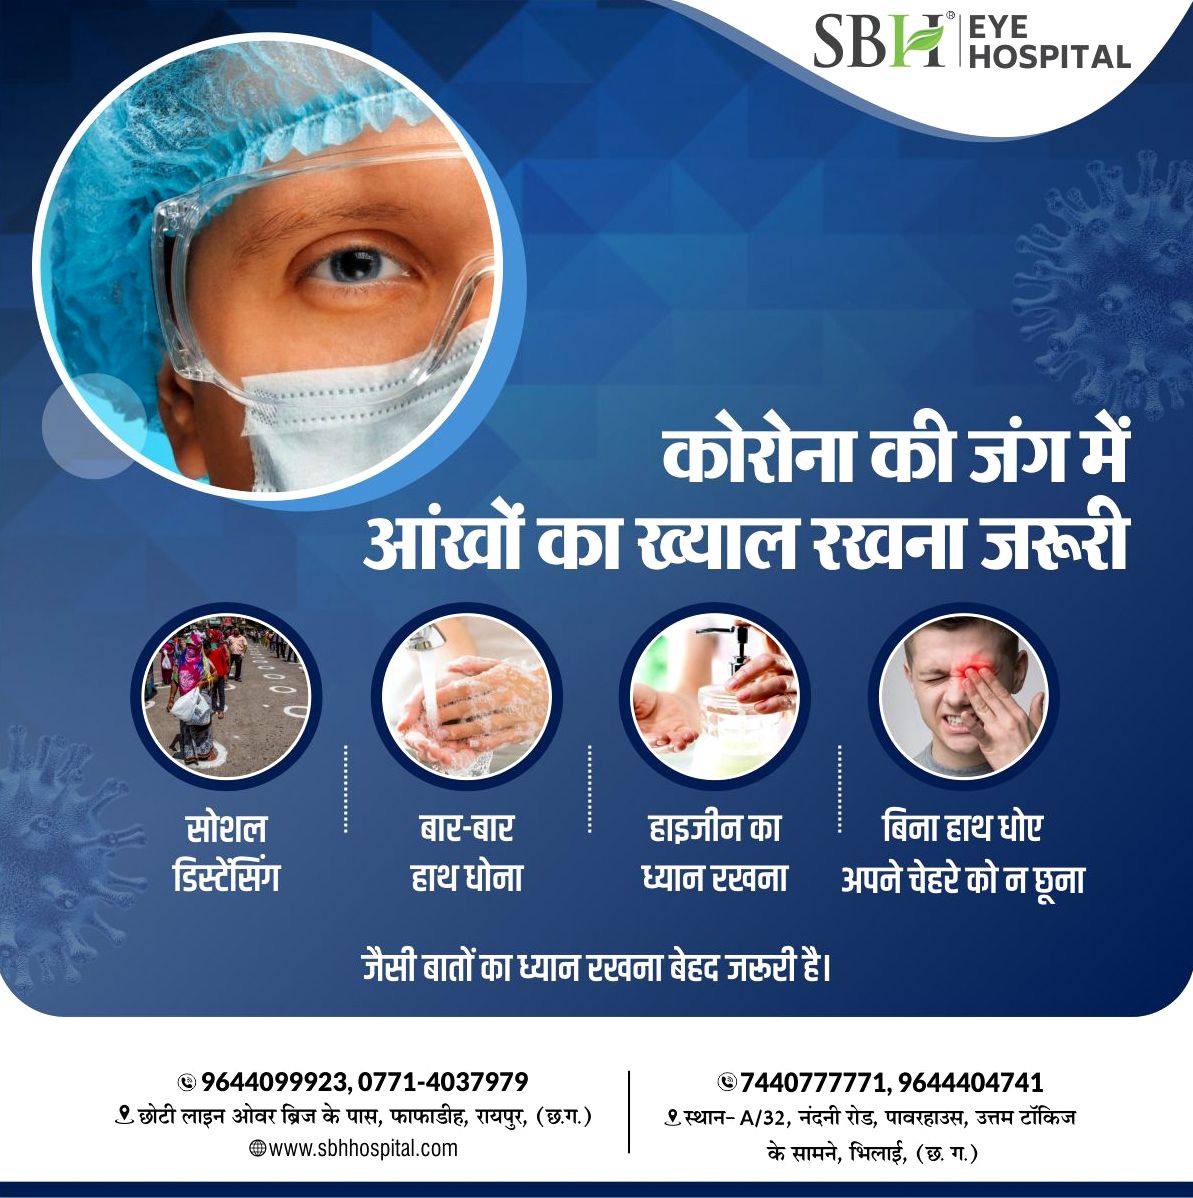 Sai Baba Eye Hospital|Dentists|Medical Services